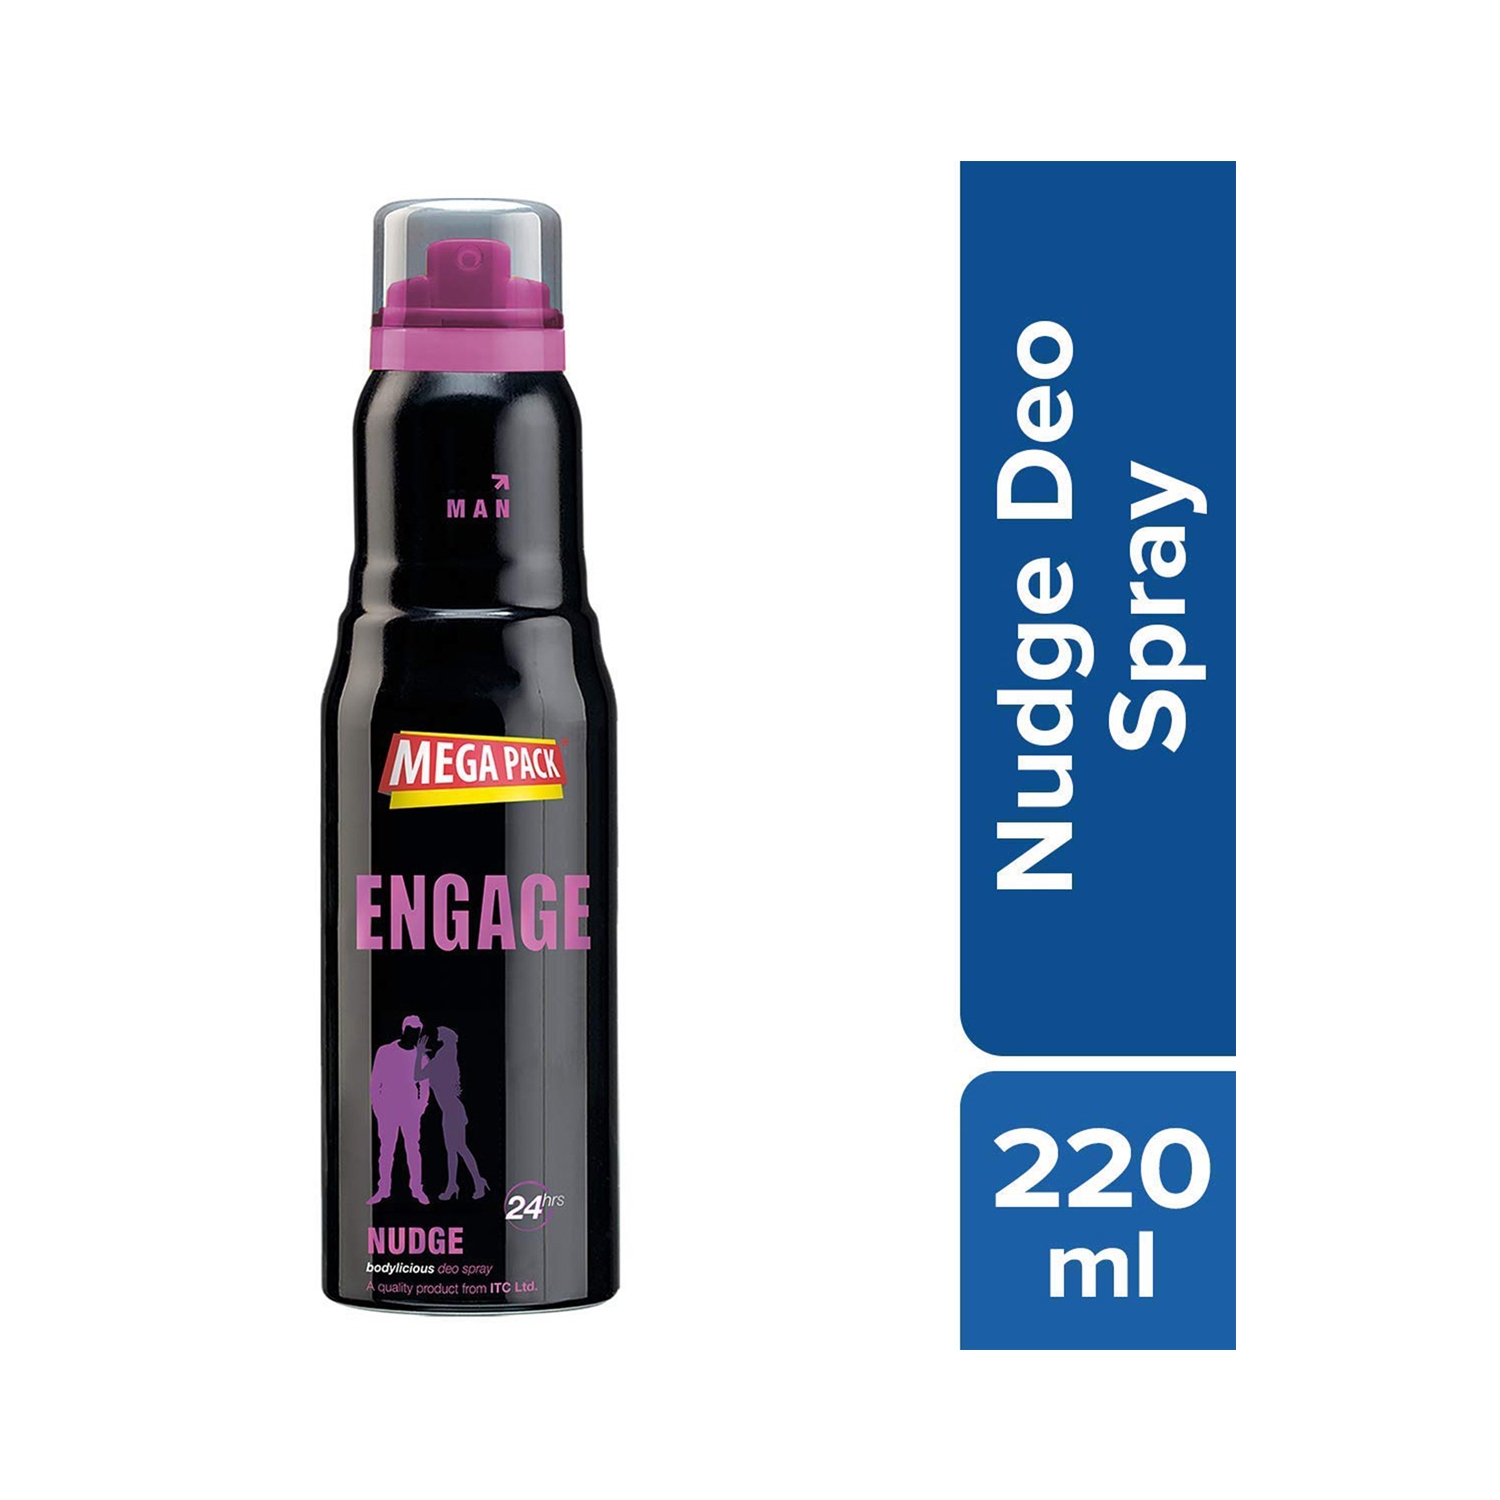 Engage Nudge Deodorant Spray For Man (220ml)